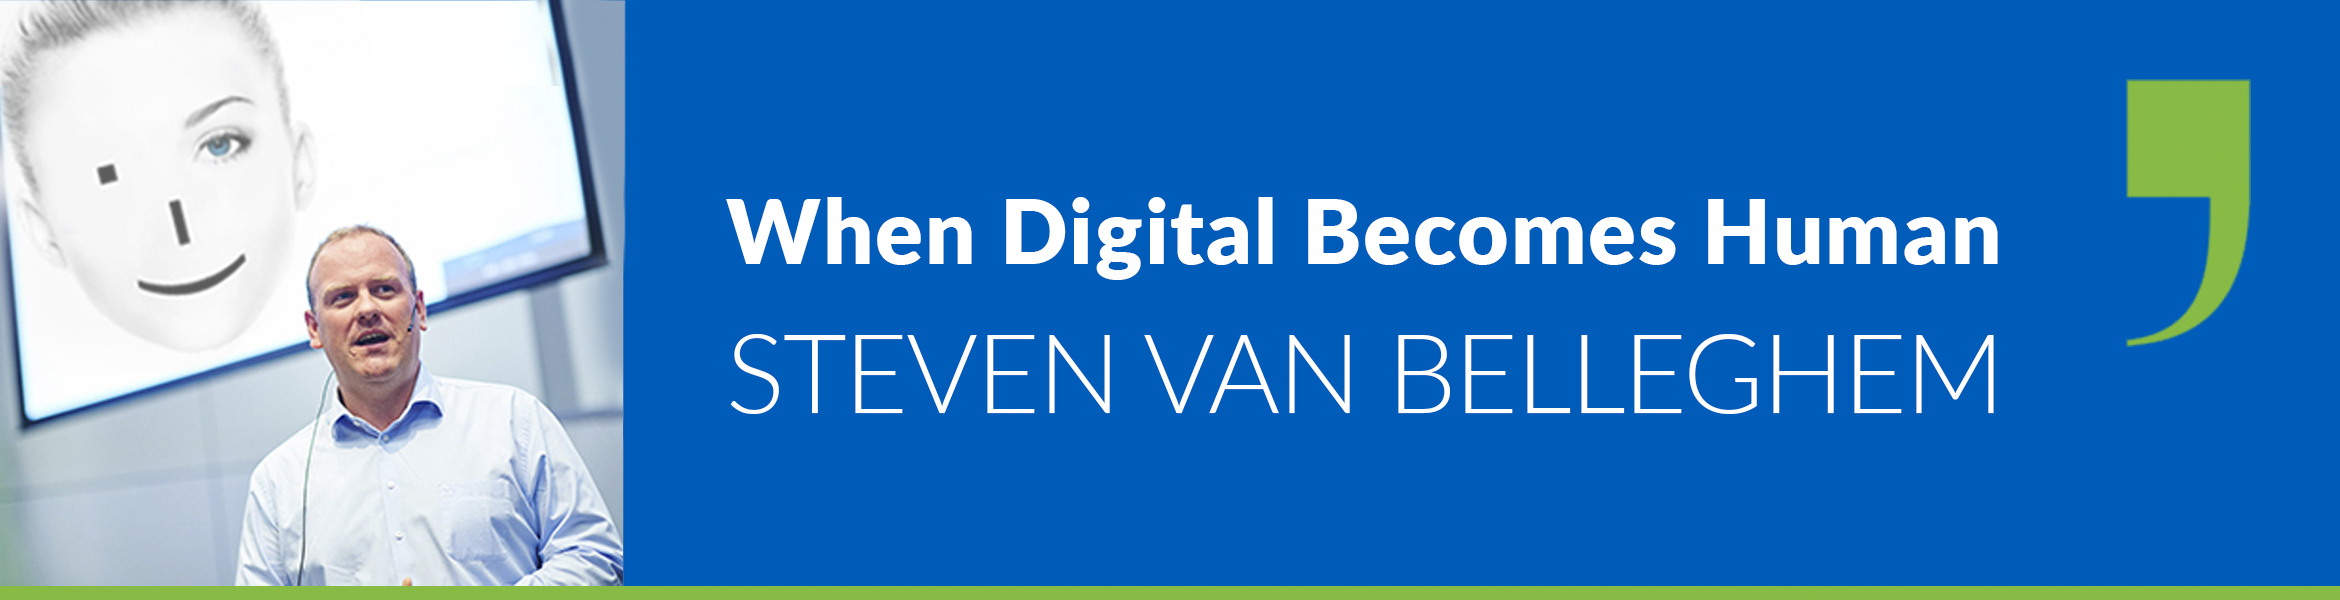 When Digital Becomes Human - Steven van Belleghem